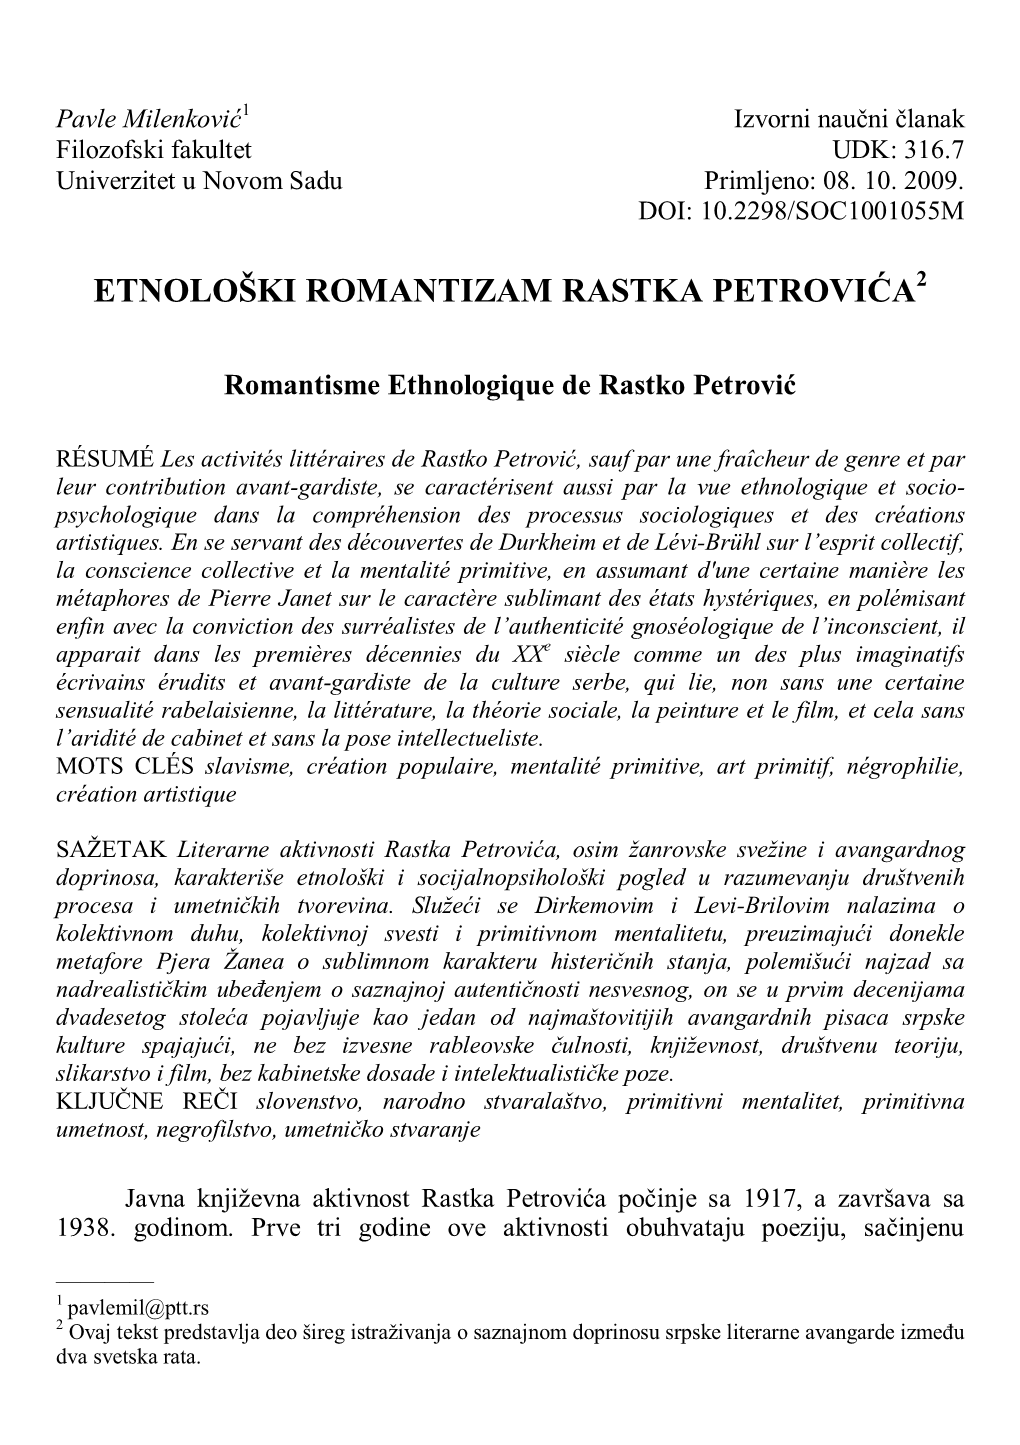 Etnološki Romantizam Rastka Petrovića